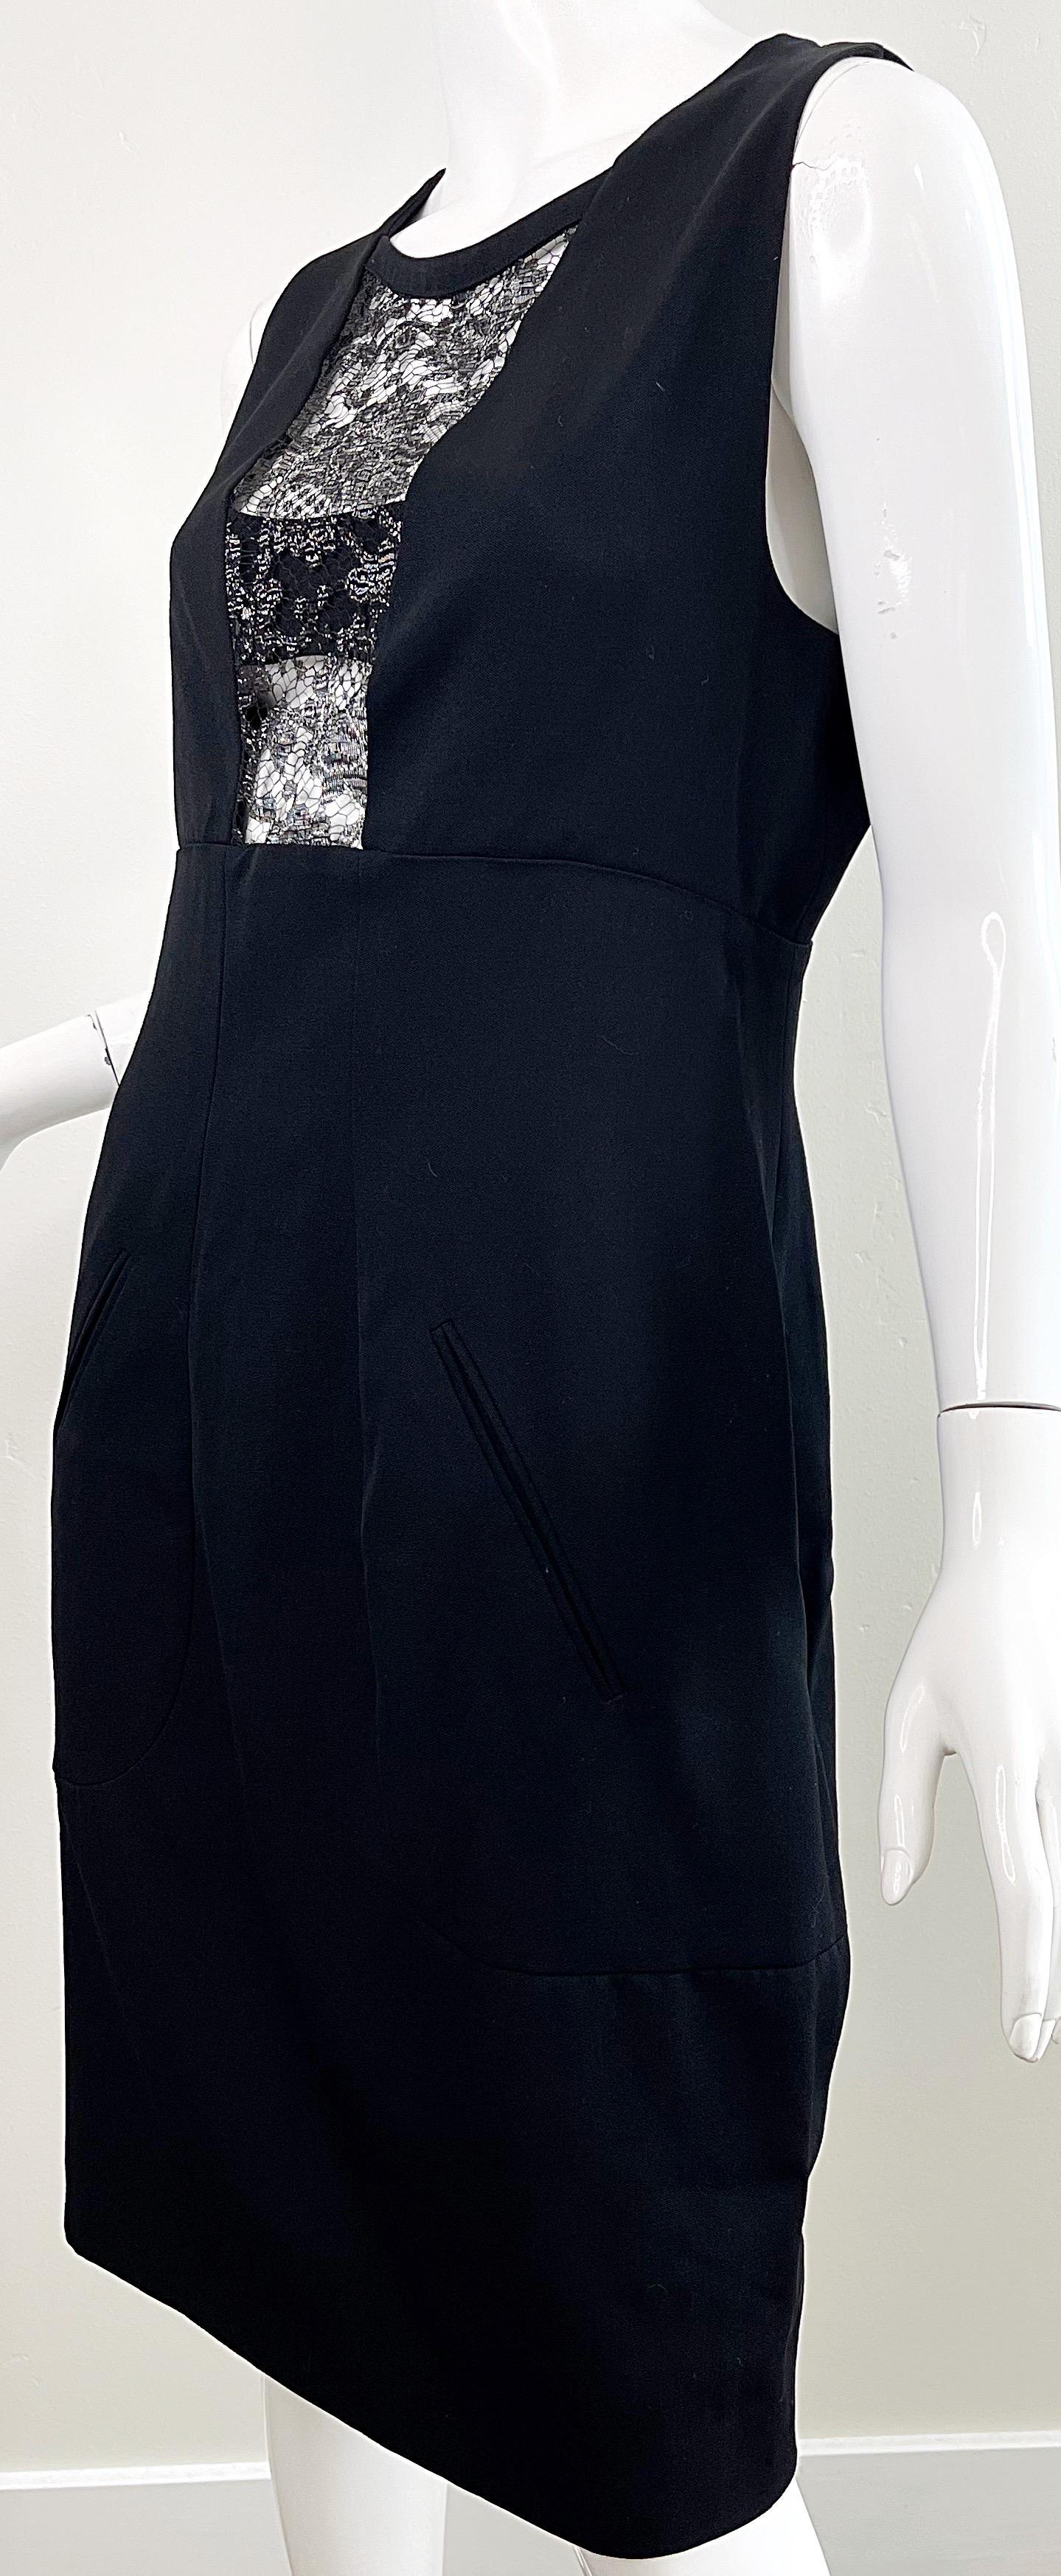 Karl Lagerfeld 1980s Black Lace Cut - Out Size 44 / 10 12 Vintage Dress + Jacket For Sale 12